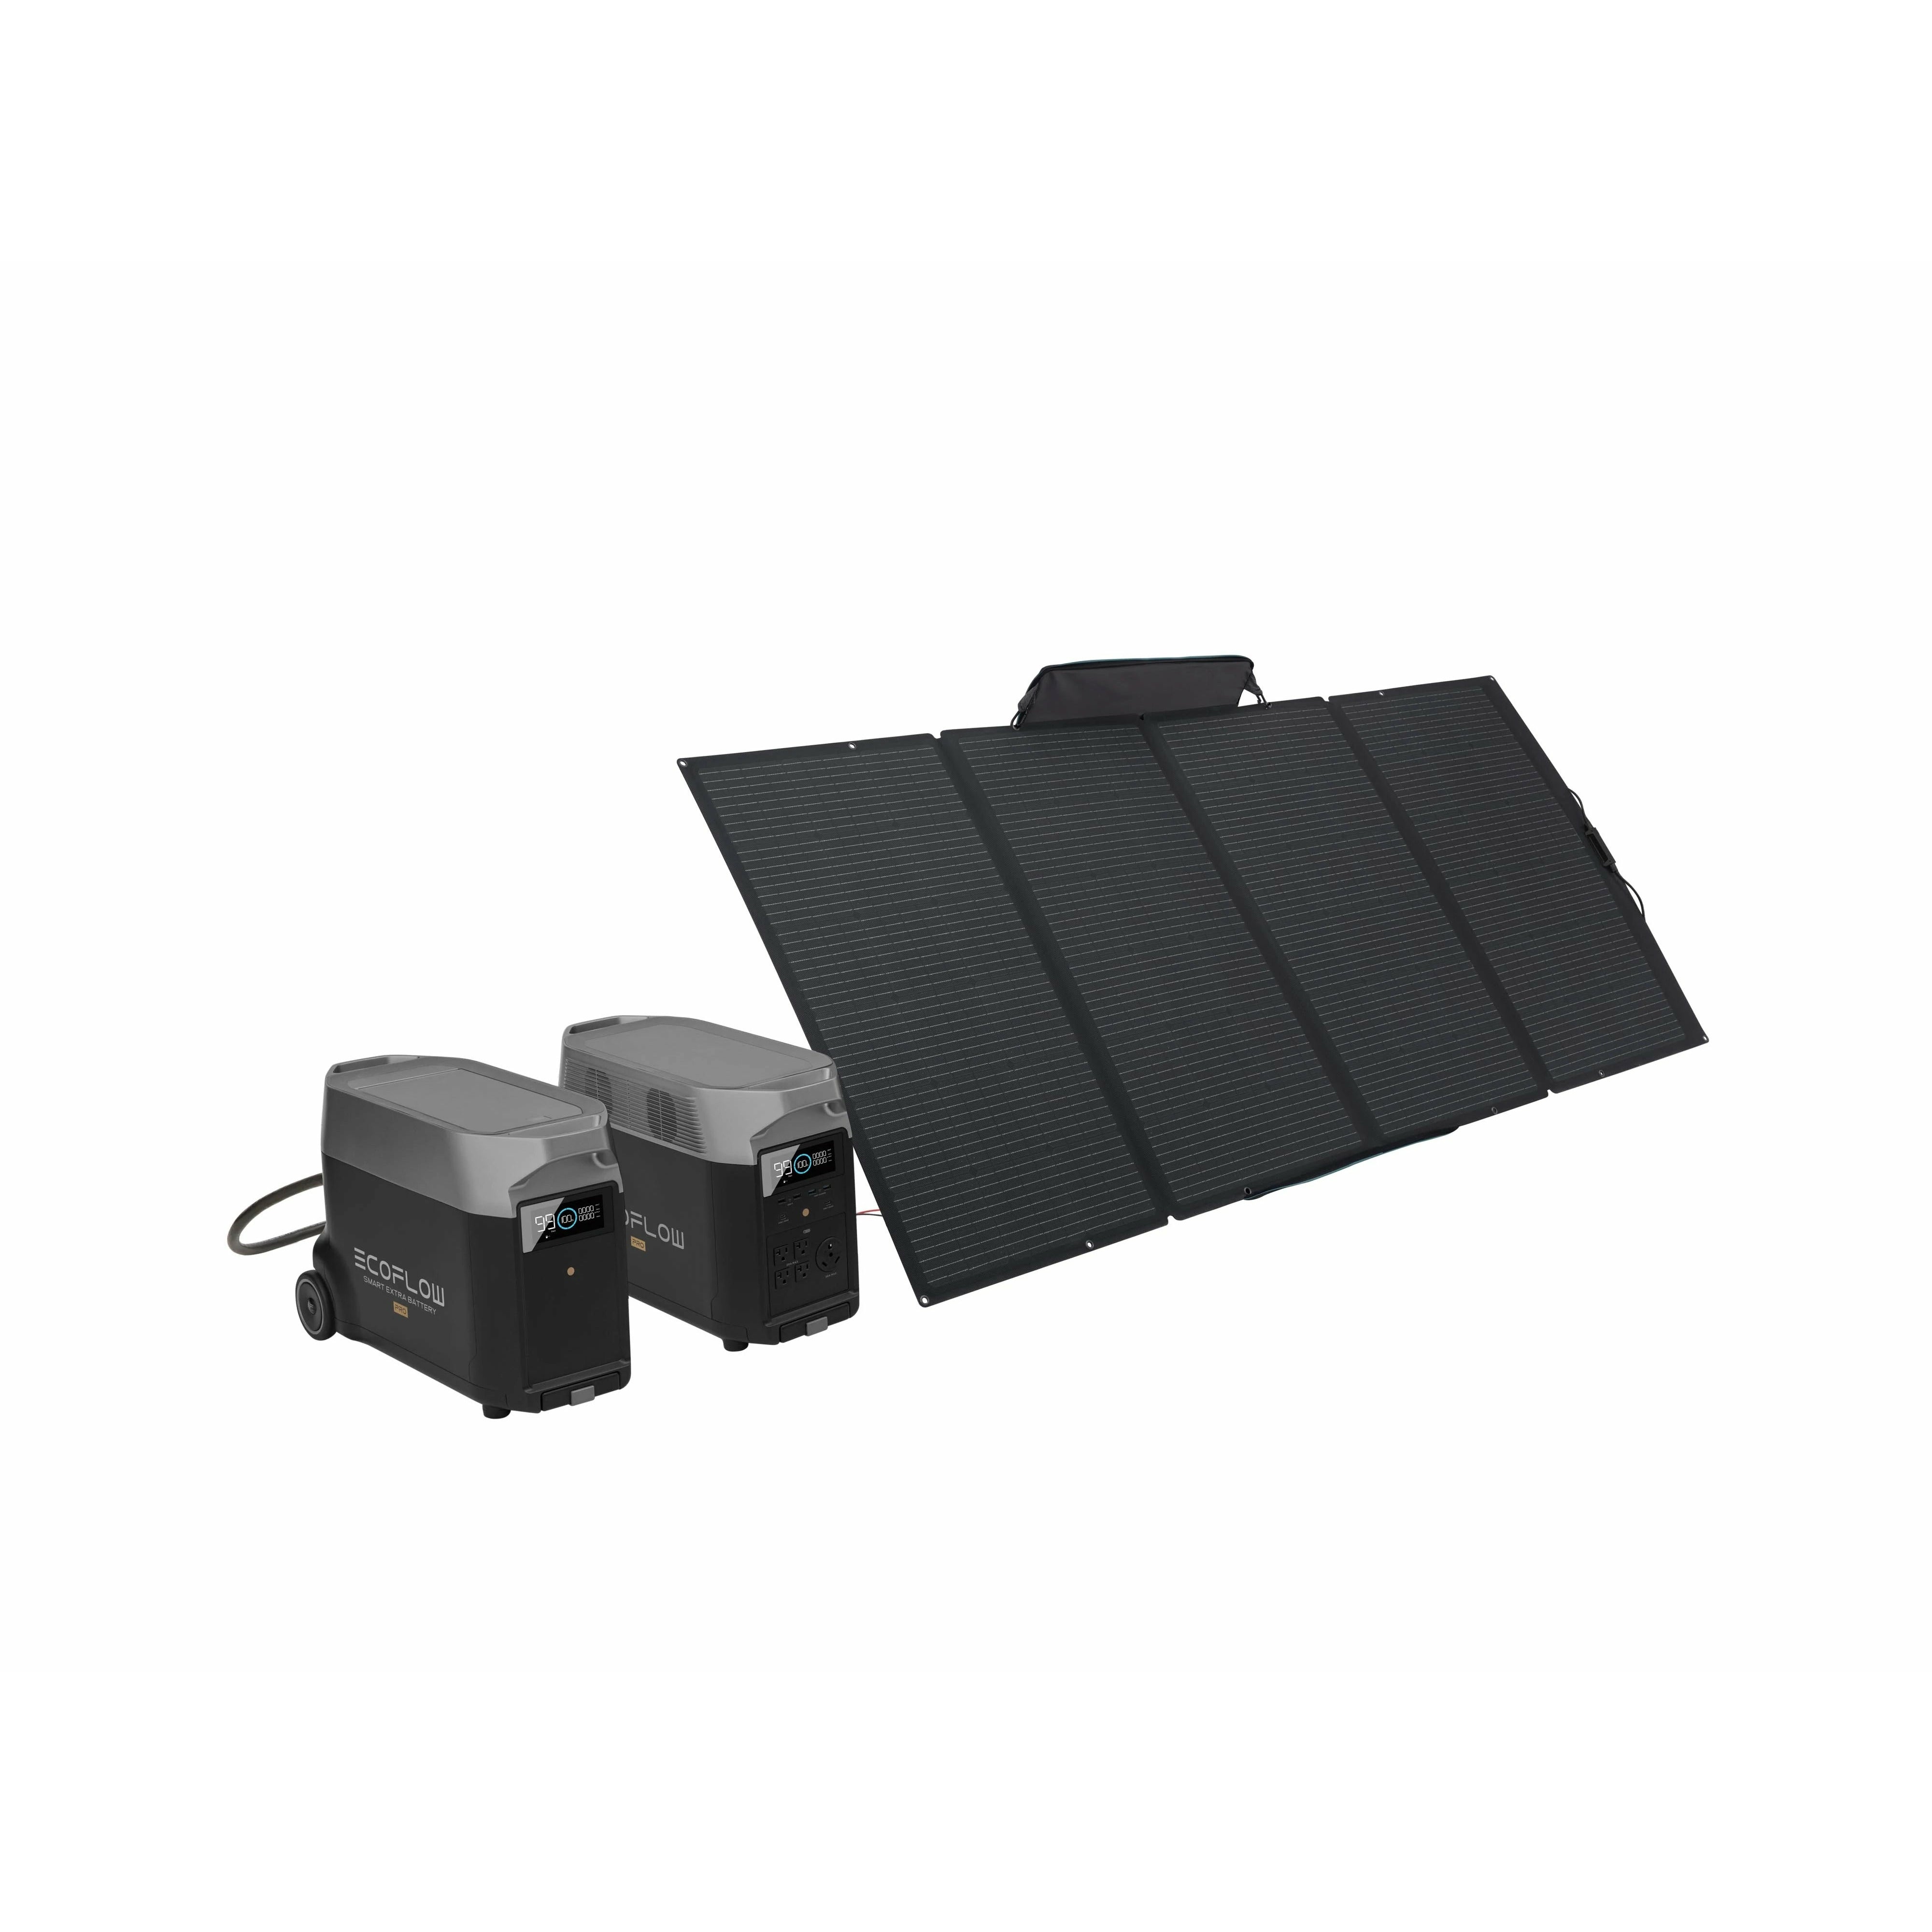 EcoFlow Delta Pro + 1x  Delta Pro Smart Extra Battery + 1x 400W Solar Panel Solar Generator Kit